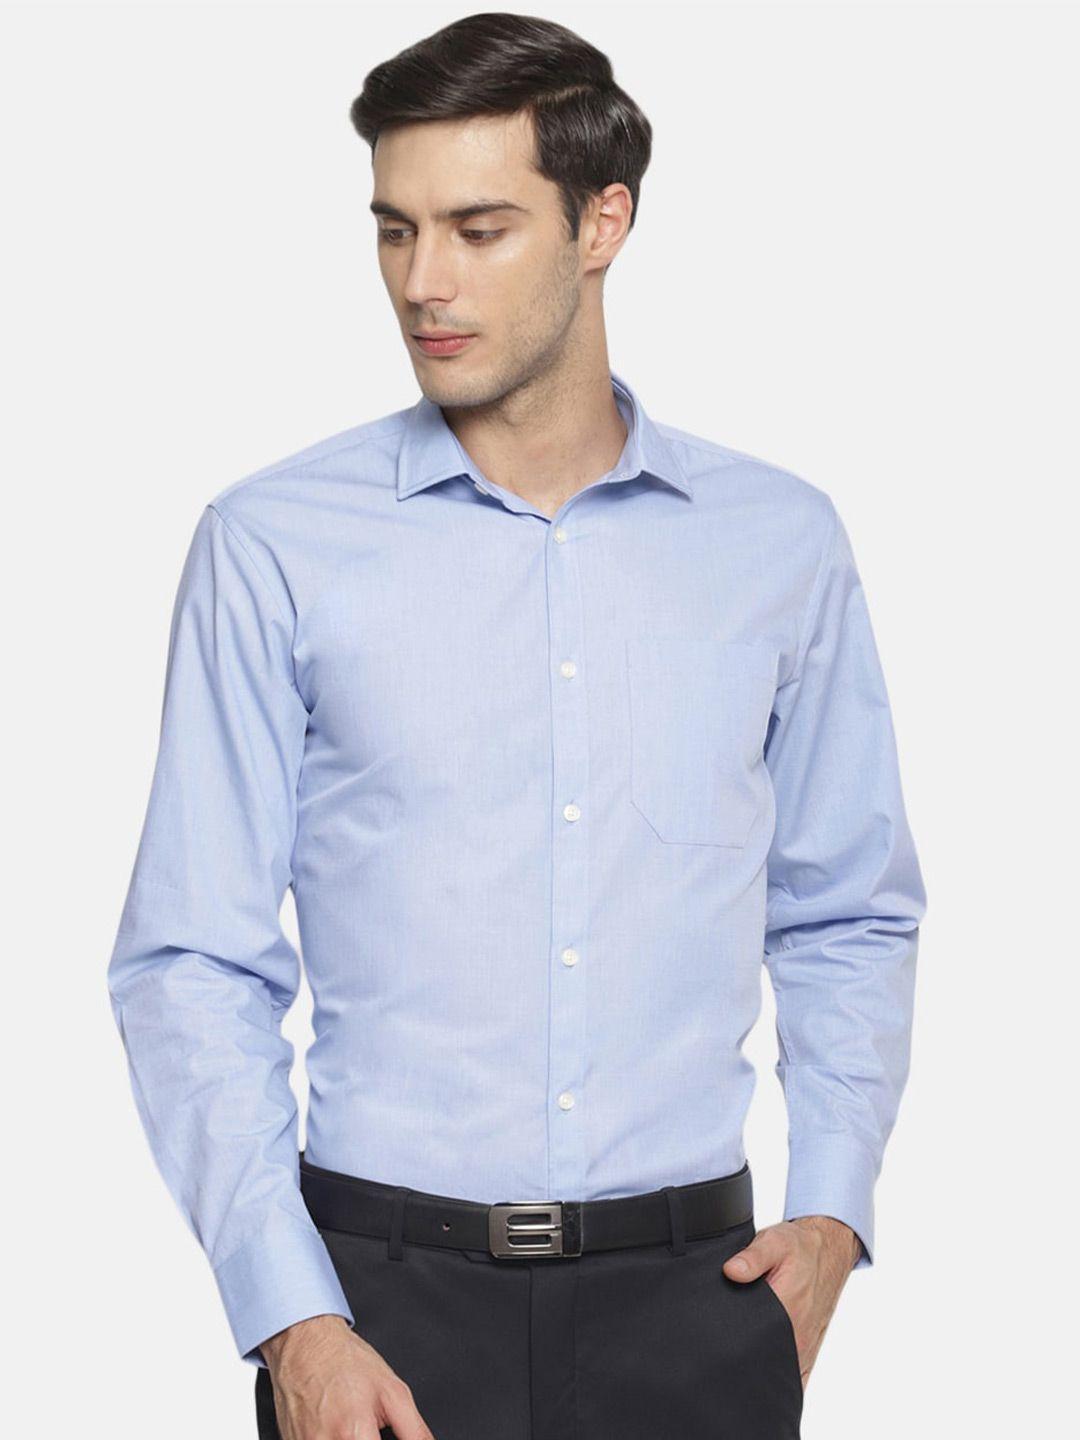 balista spread collar cotton formal shirt